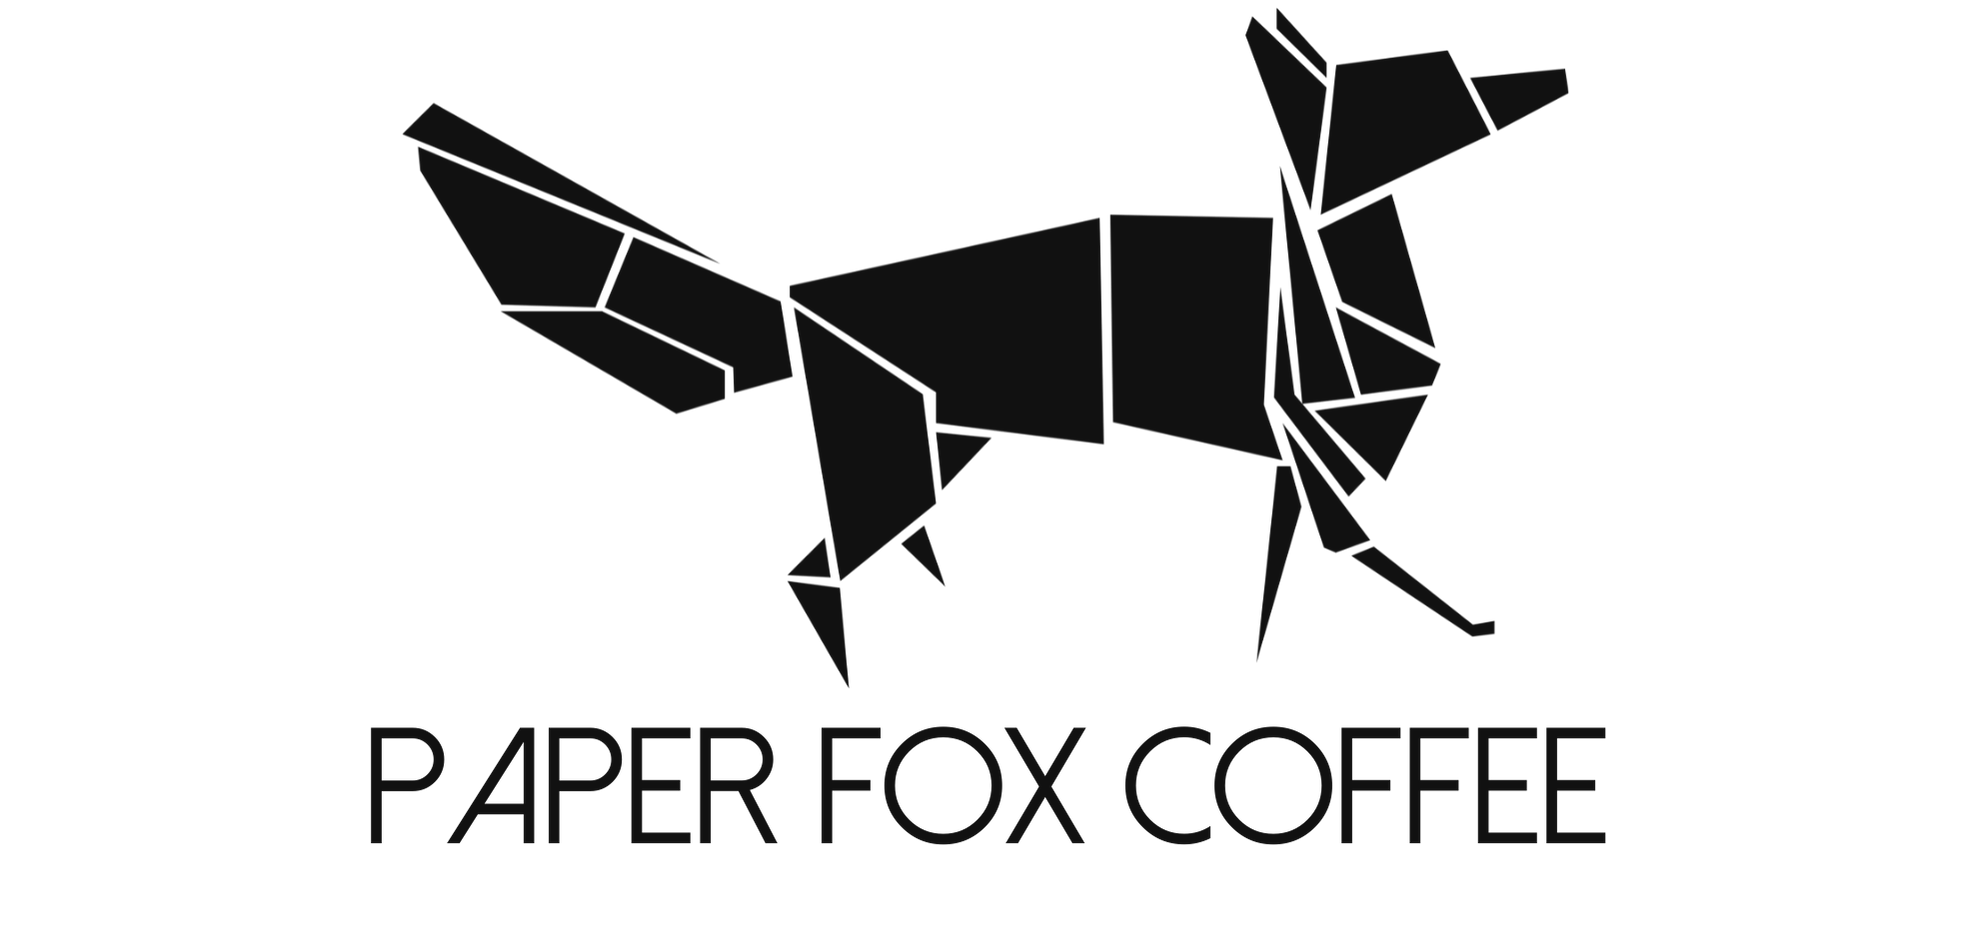 Paper Fox Coffee Logoc